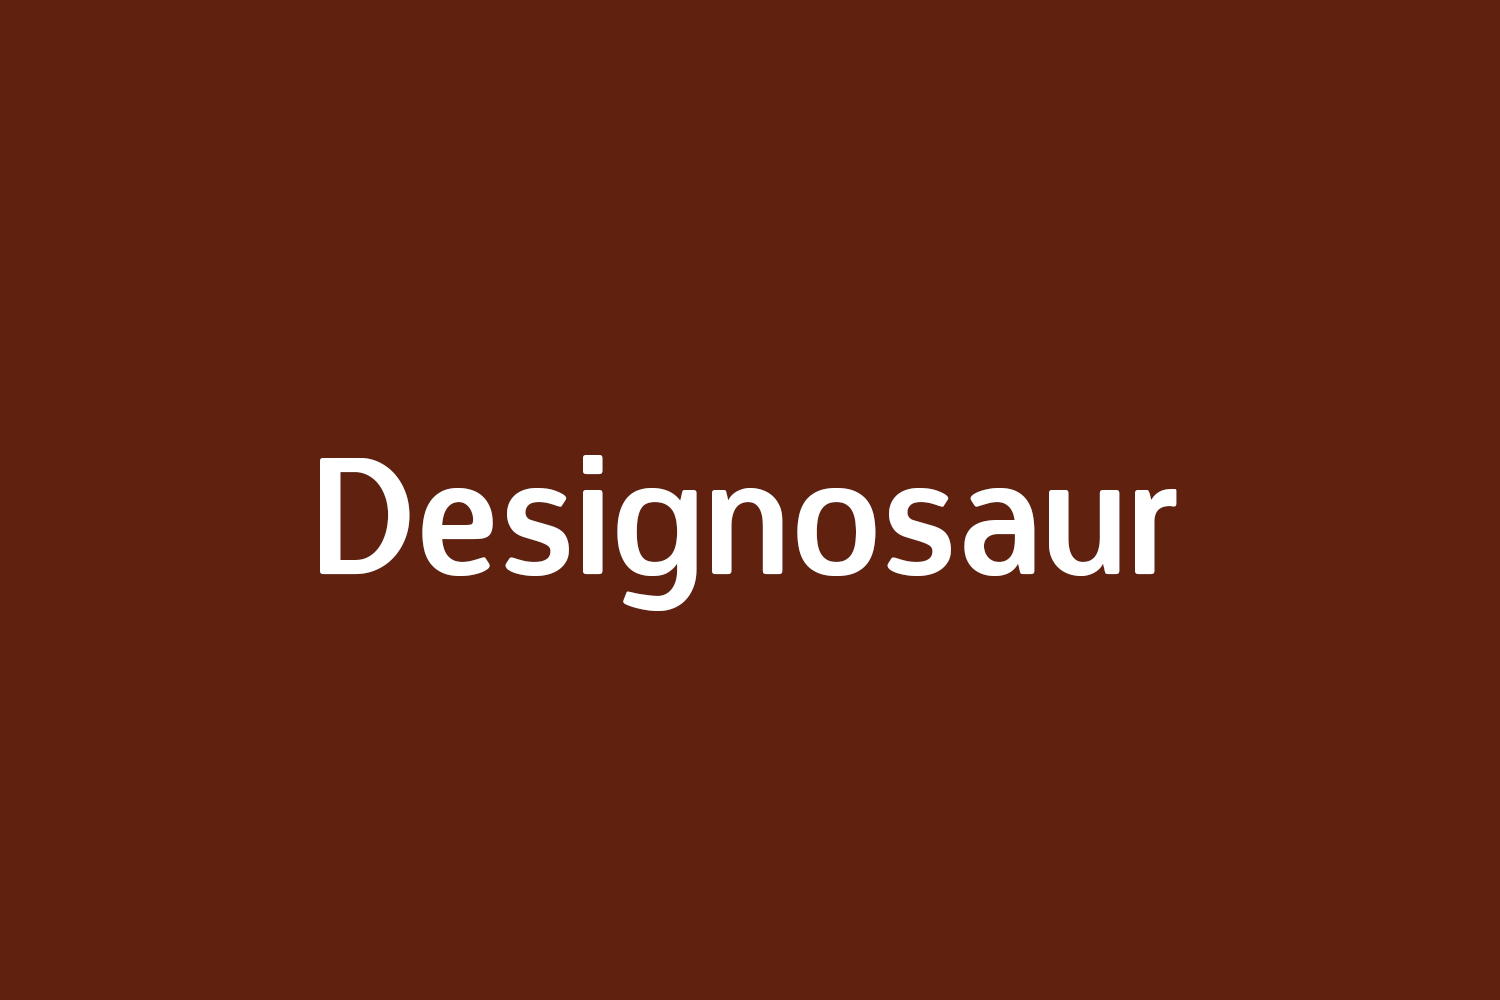 Designosaur Free Font